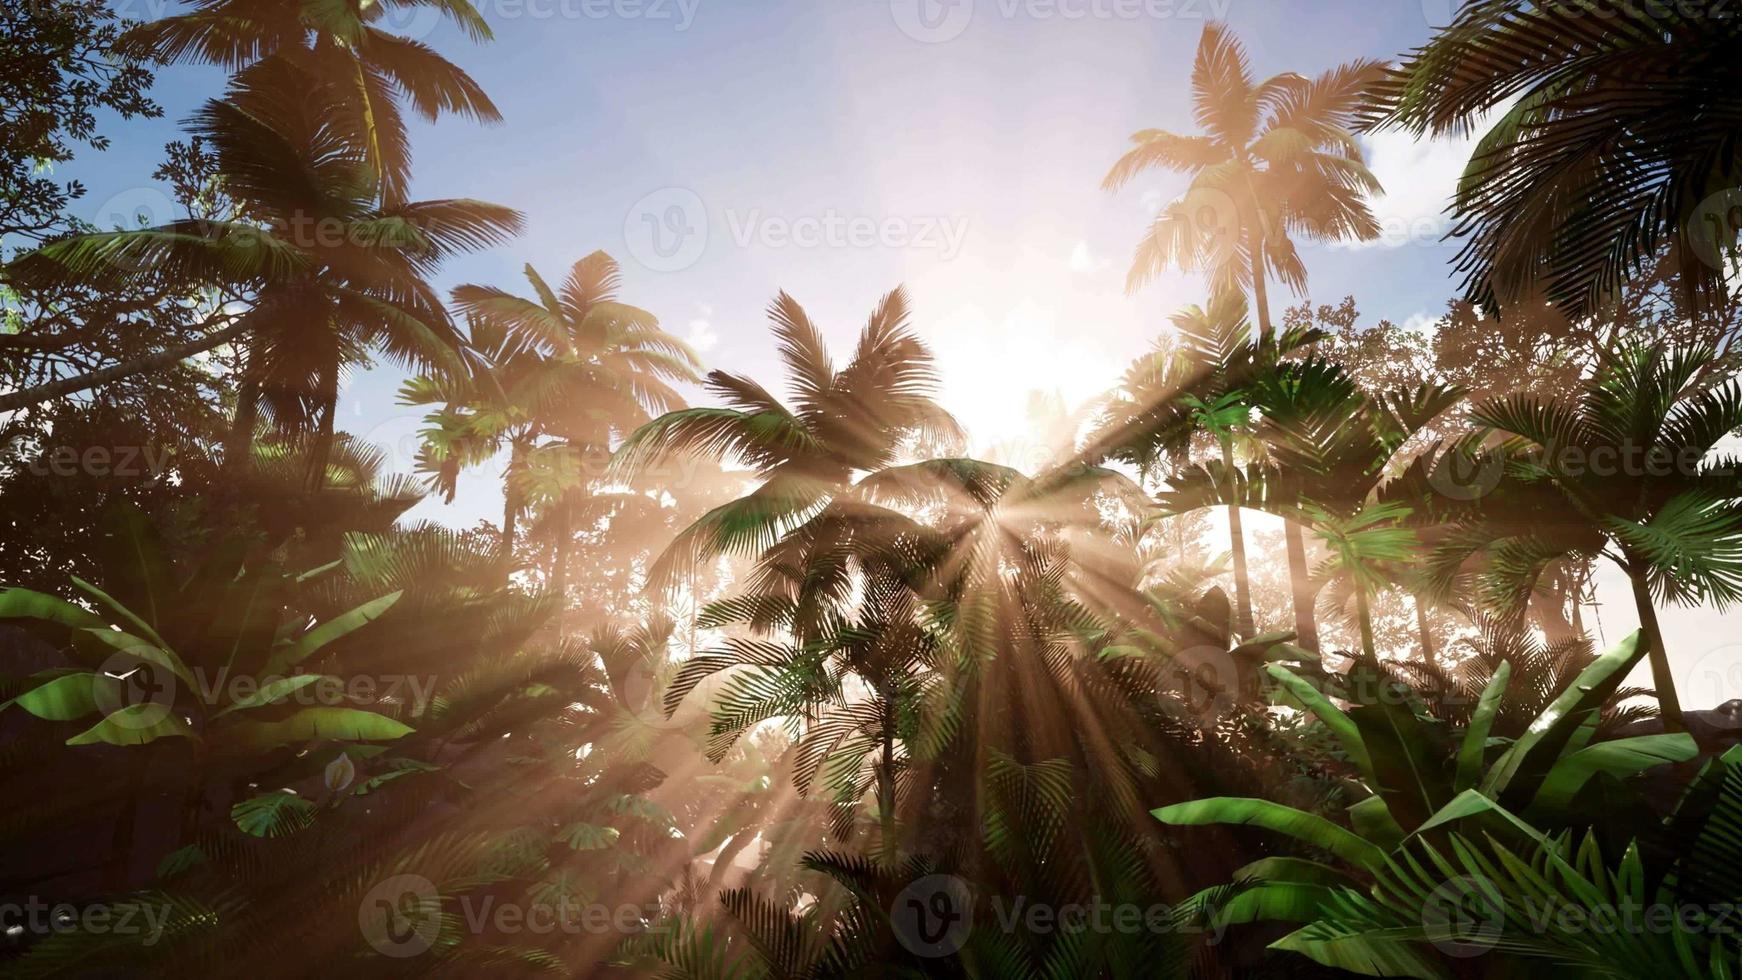 Sunset Beams through Palm Trees photo